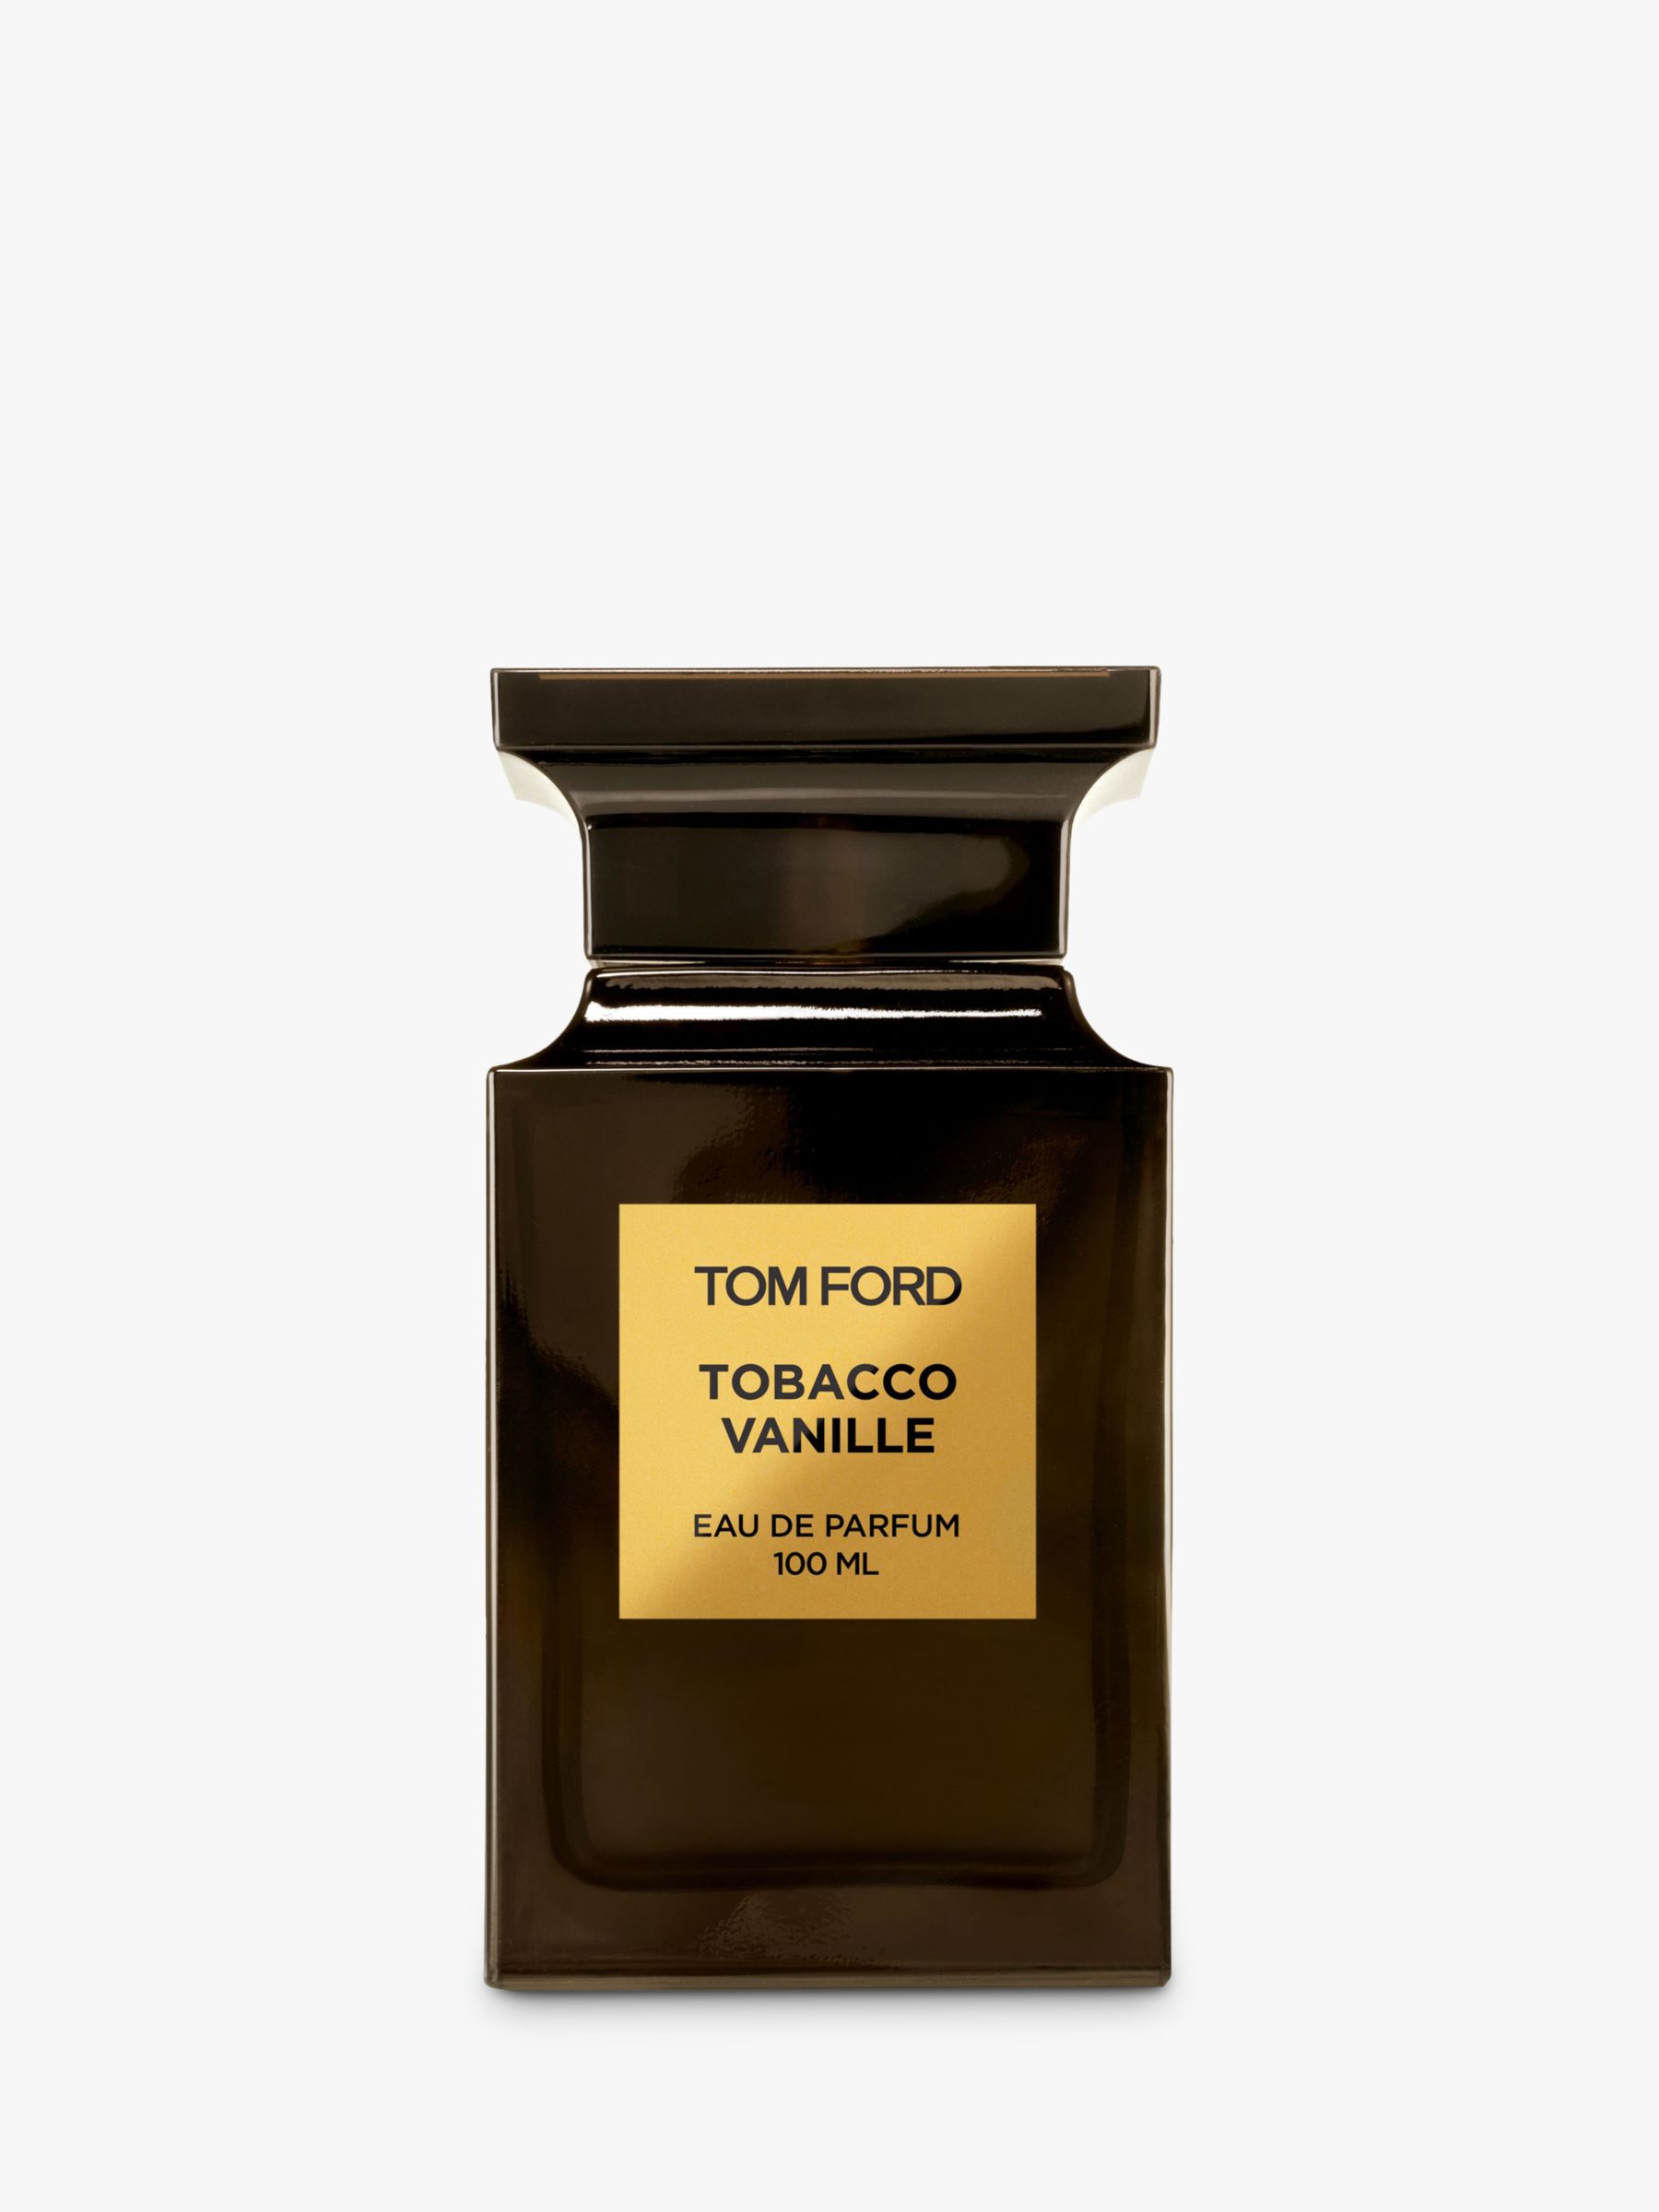 TOM FORD Tobacco Vanille Eau de Parfum EDP 3.4 fl oz / 100